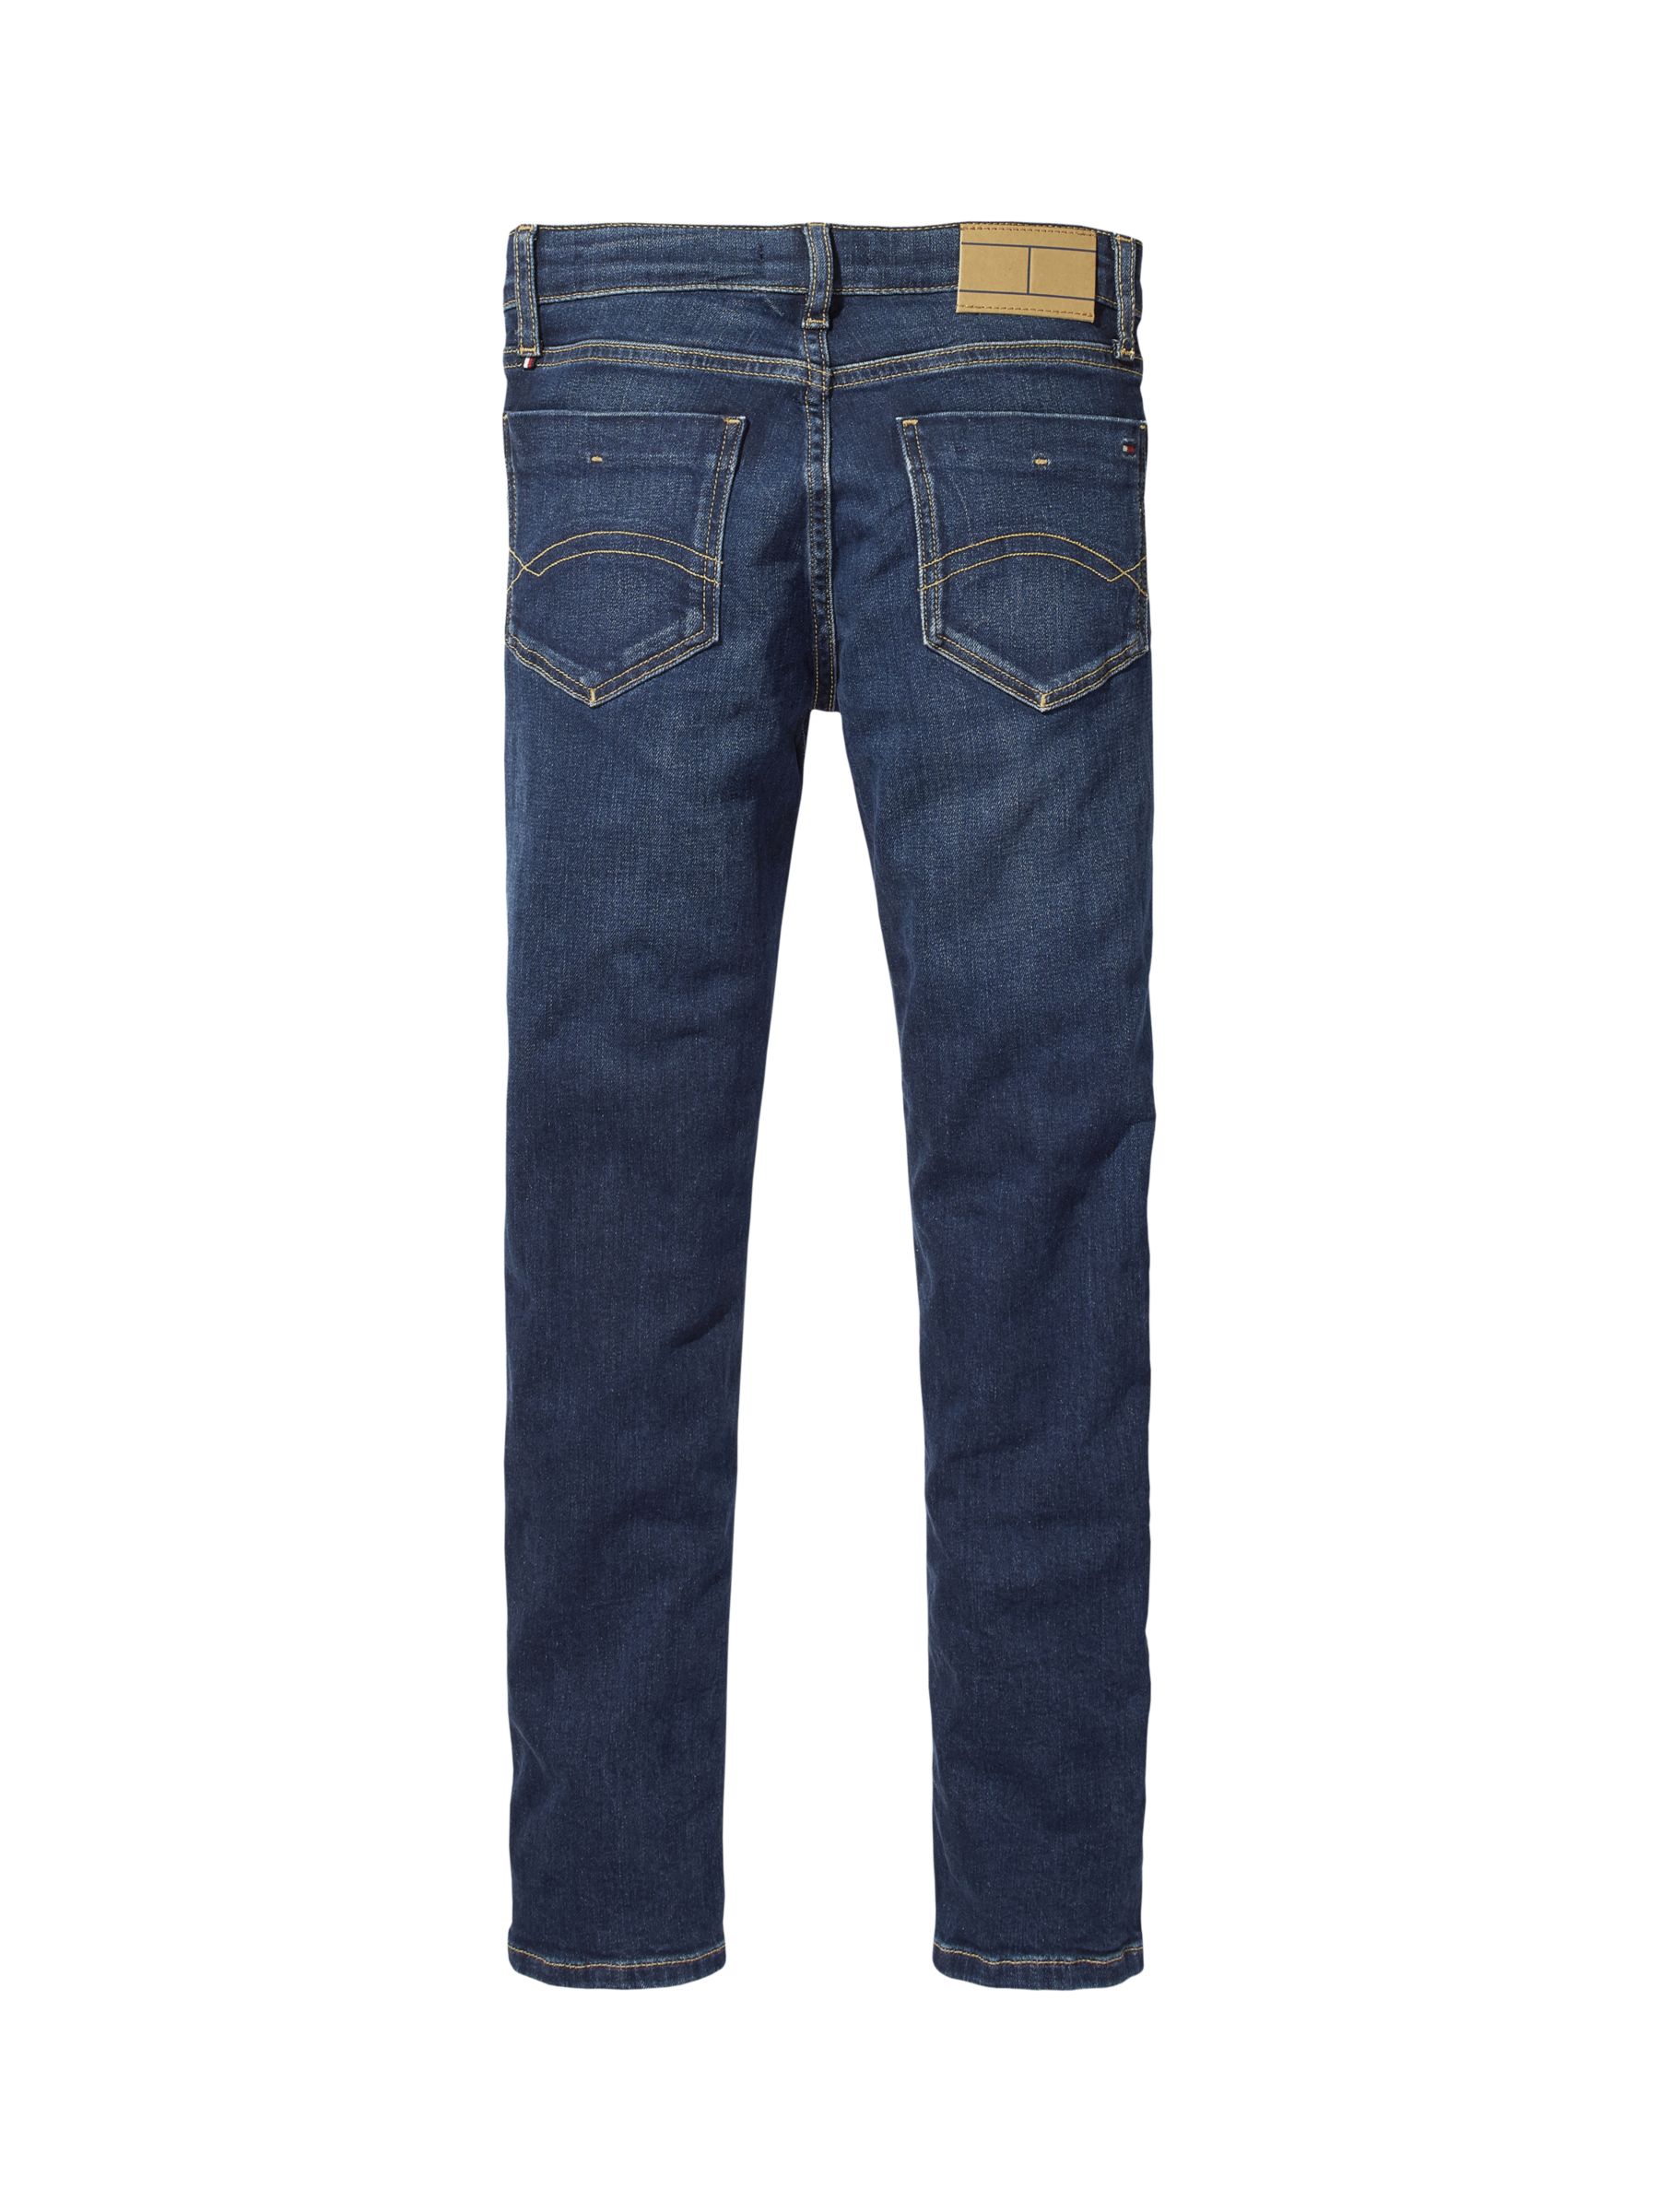 Hilfiger Boys' Slim Fit Jeans, New York Dark Stretch at John Lewis & Partners